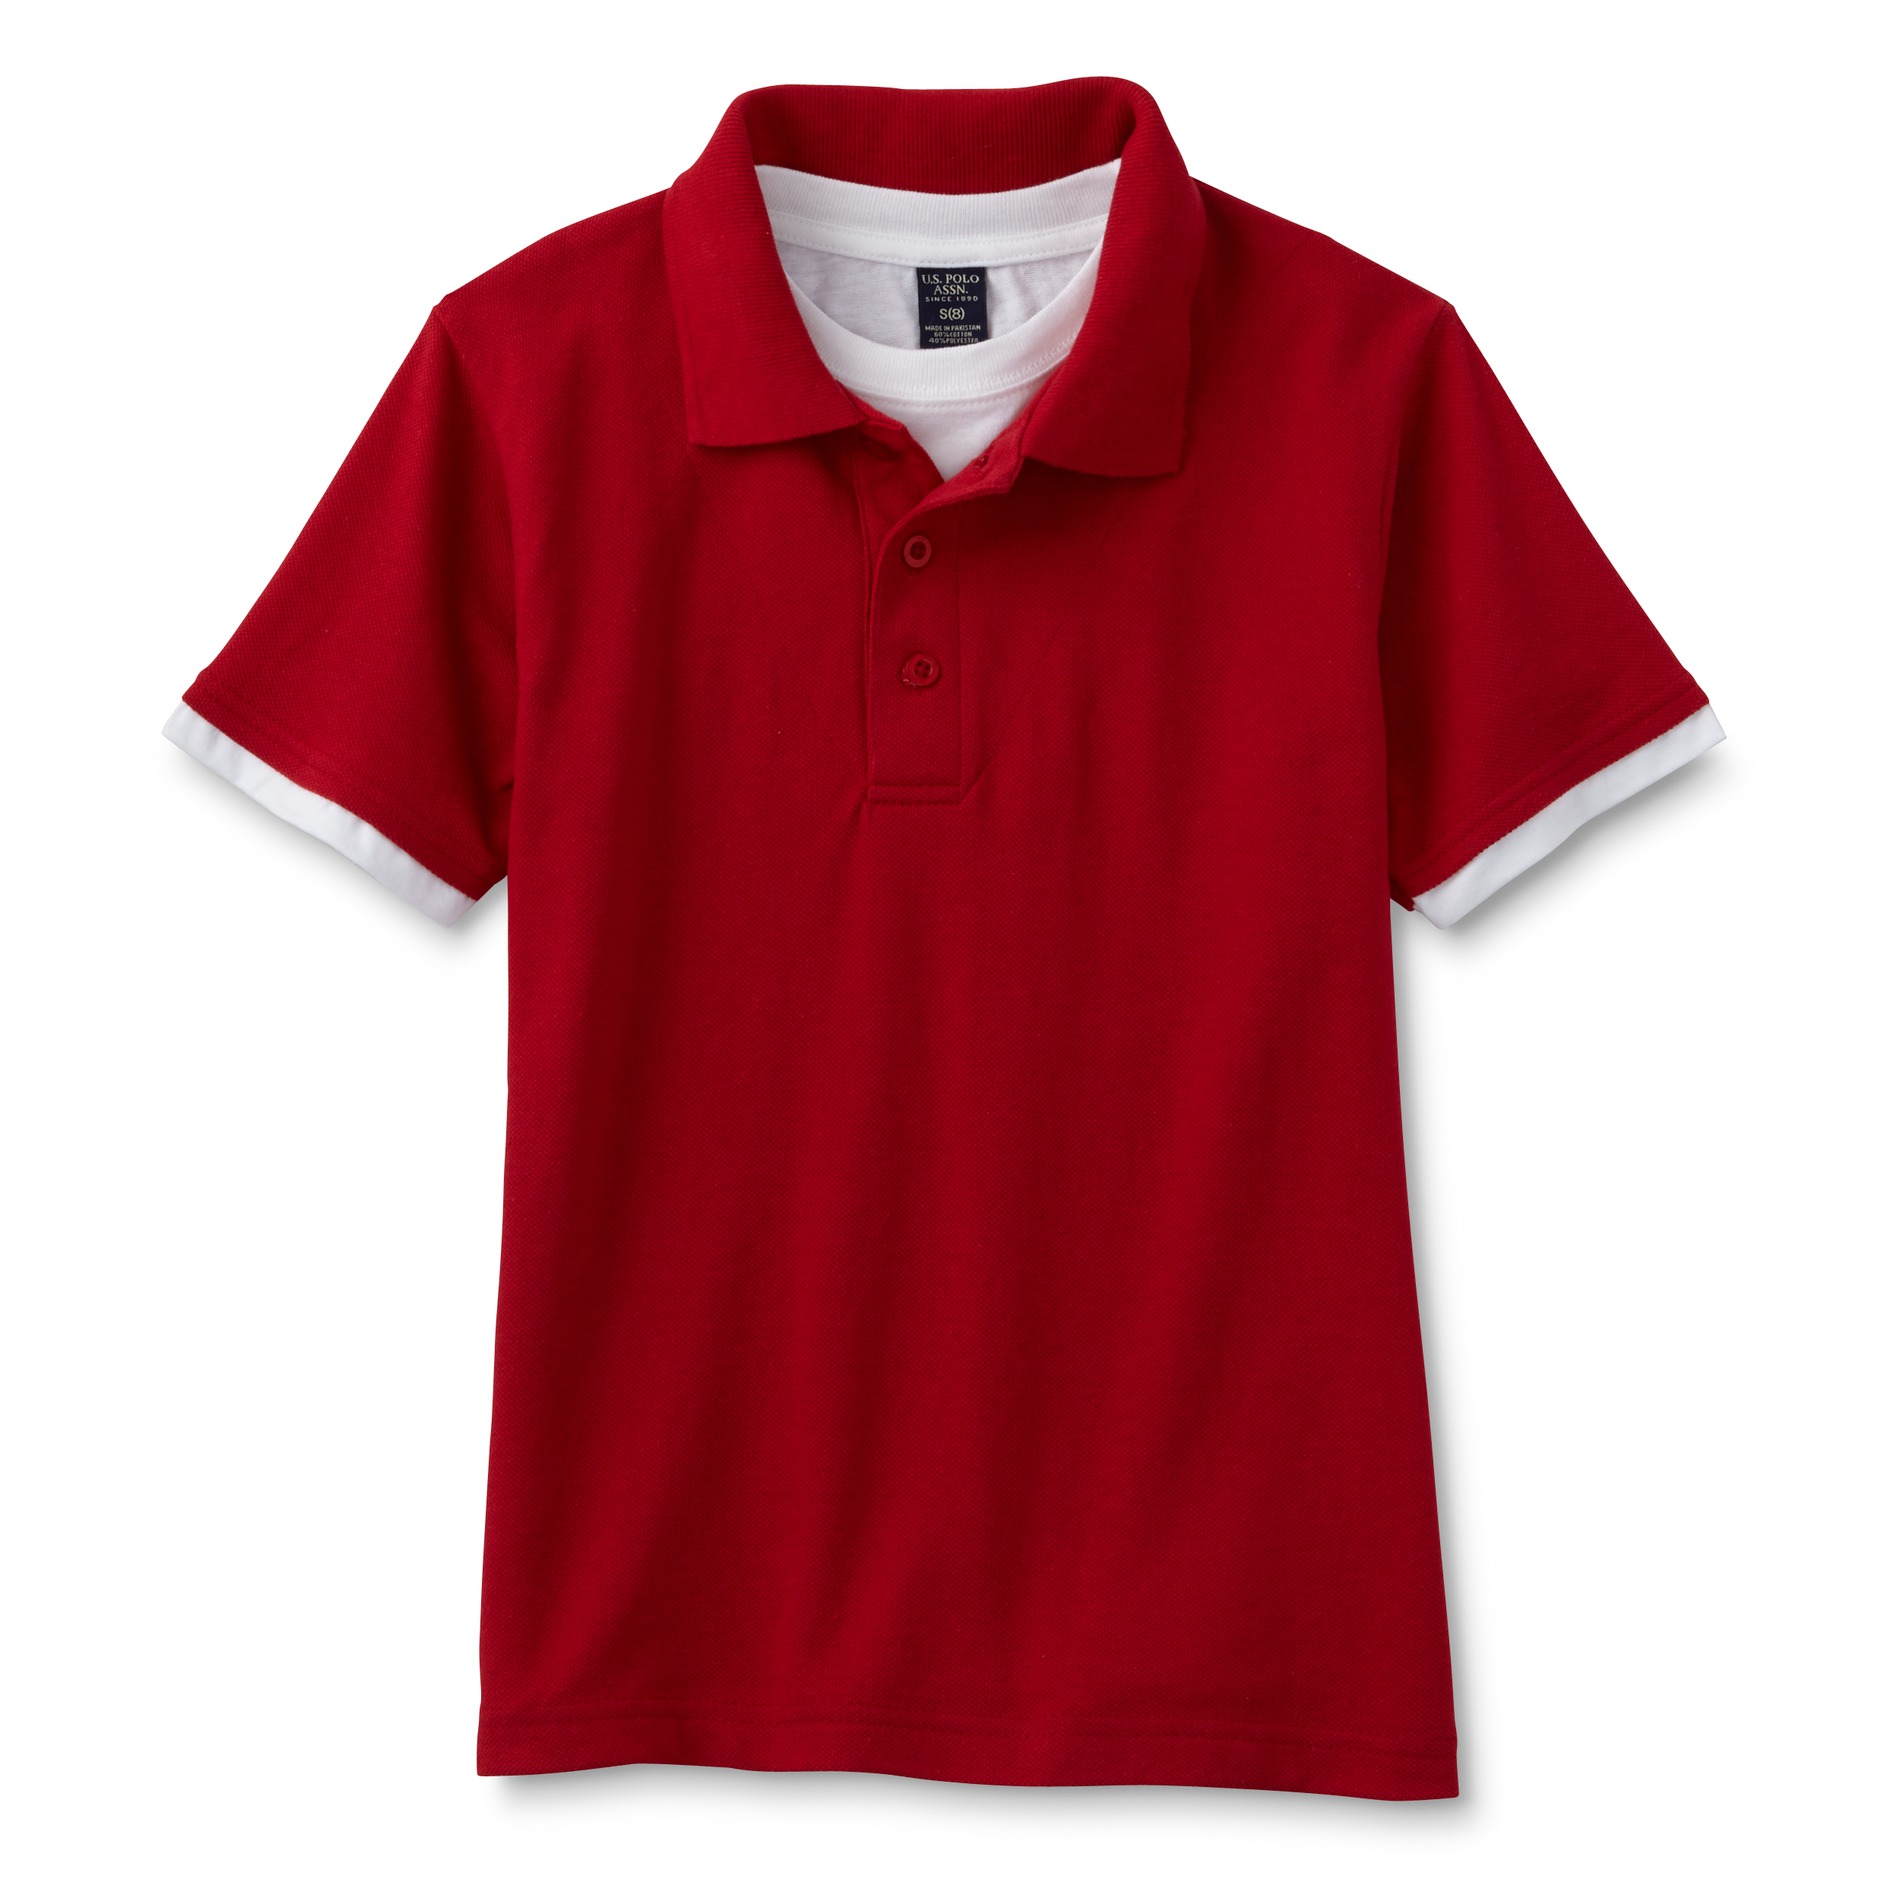 U.S. Polo Assn. Boy's Layered-Look Polo Shirt